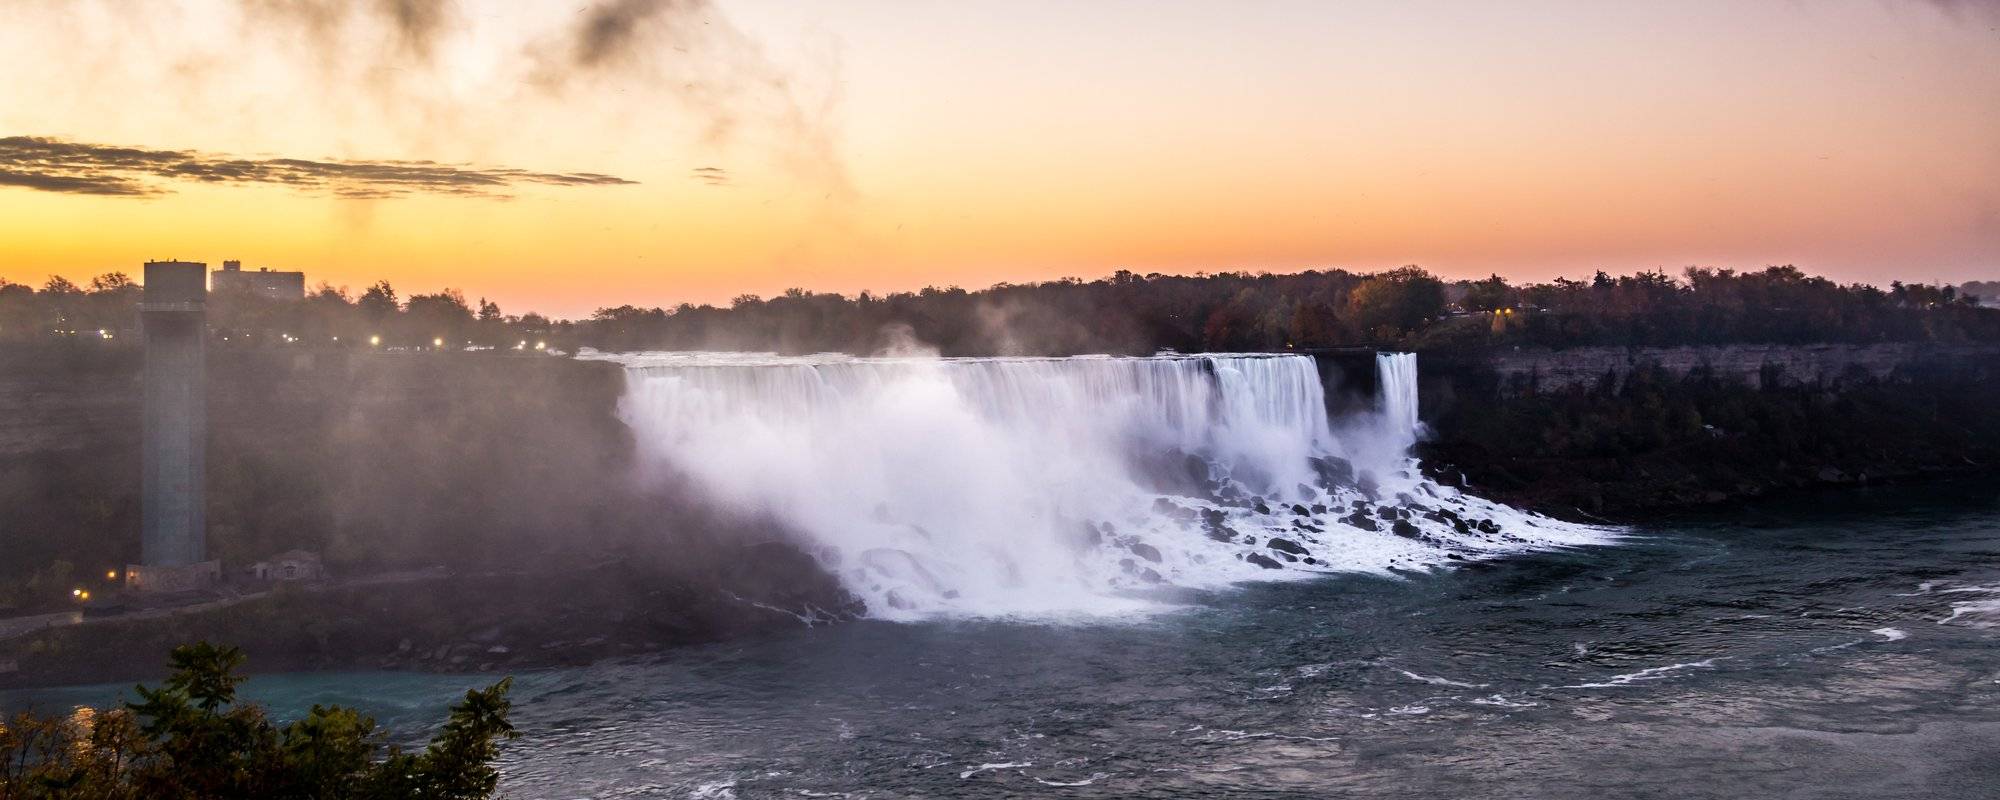 A sunrise at the Niagara Falls